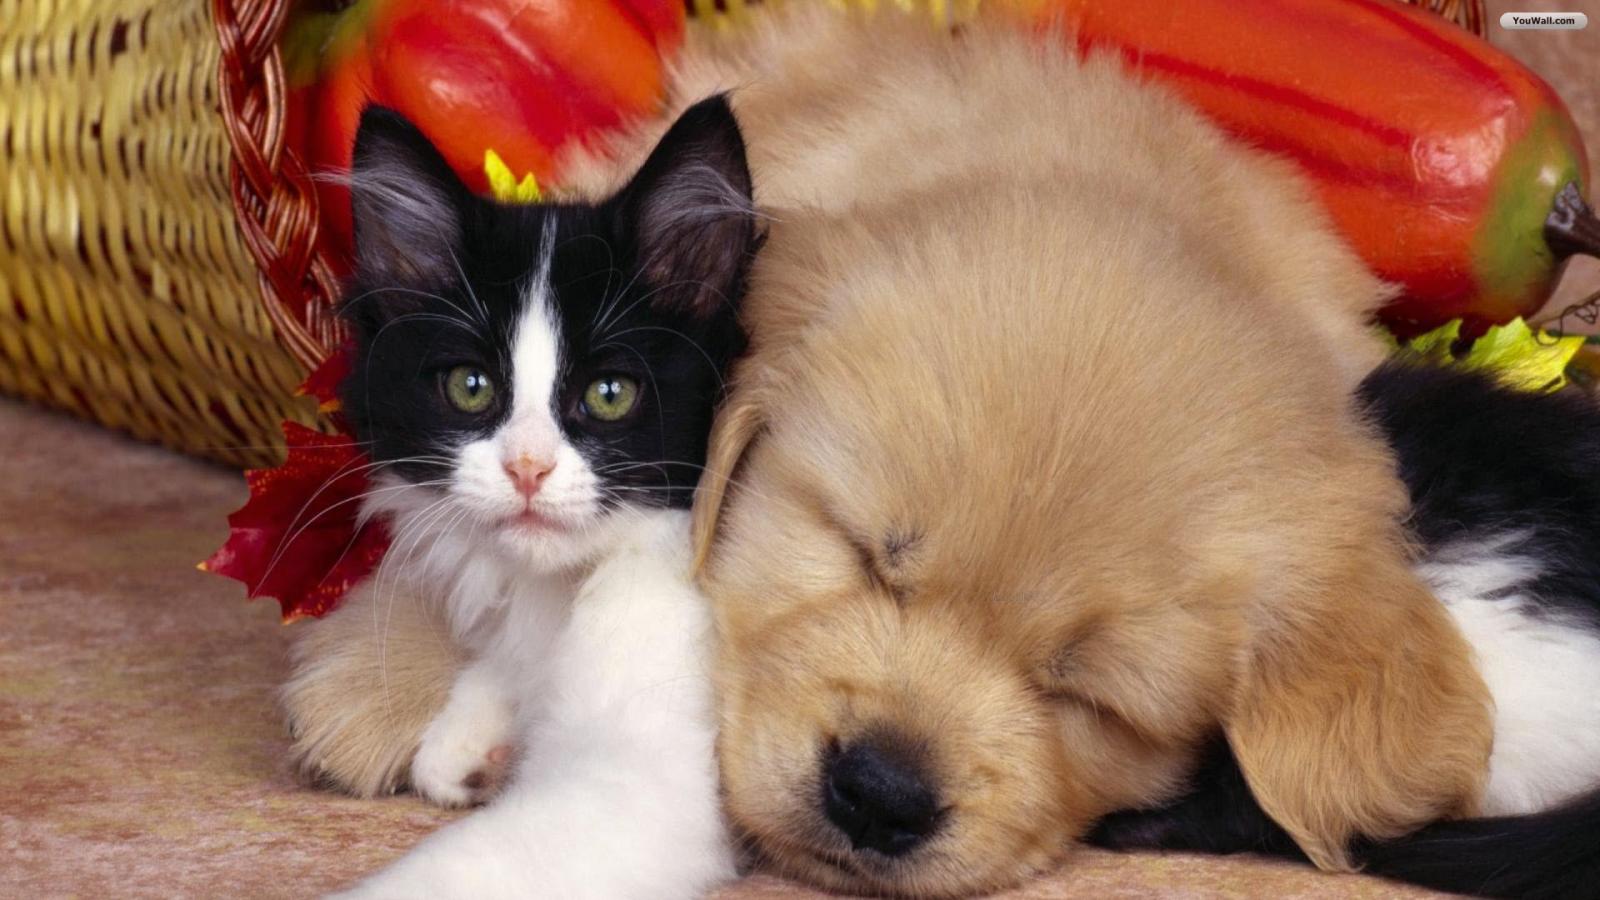   Cute Cat and Dog Wallpaper   wallpaperwallpapersfree wallpaper